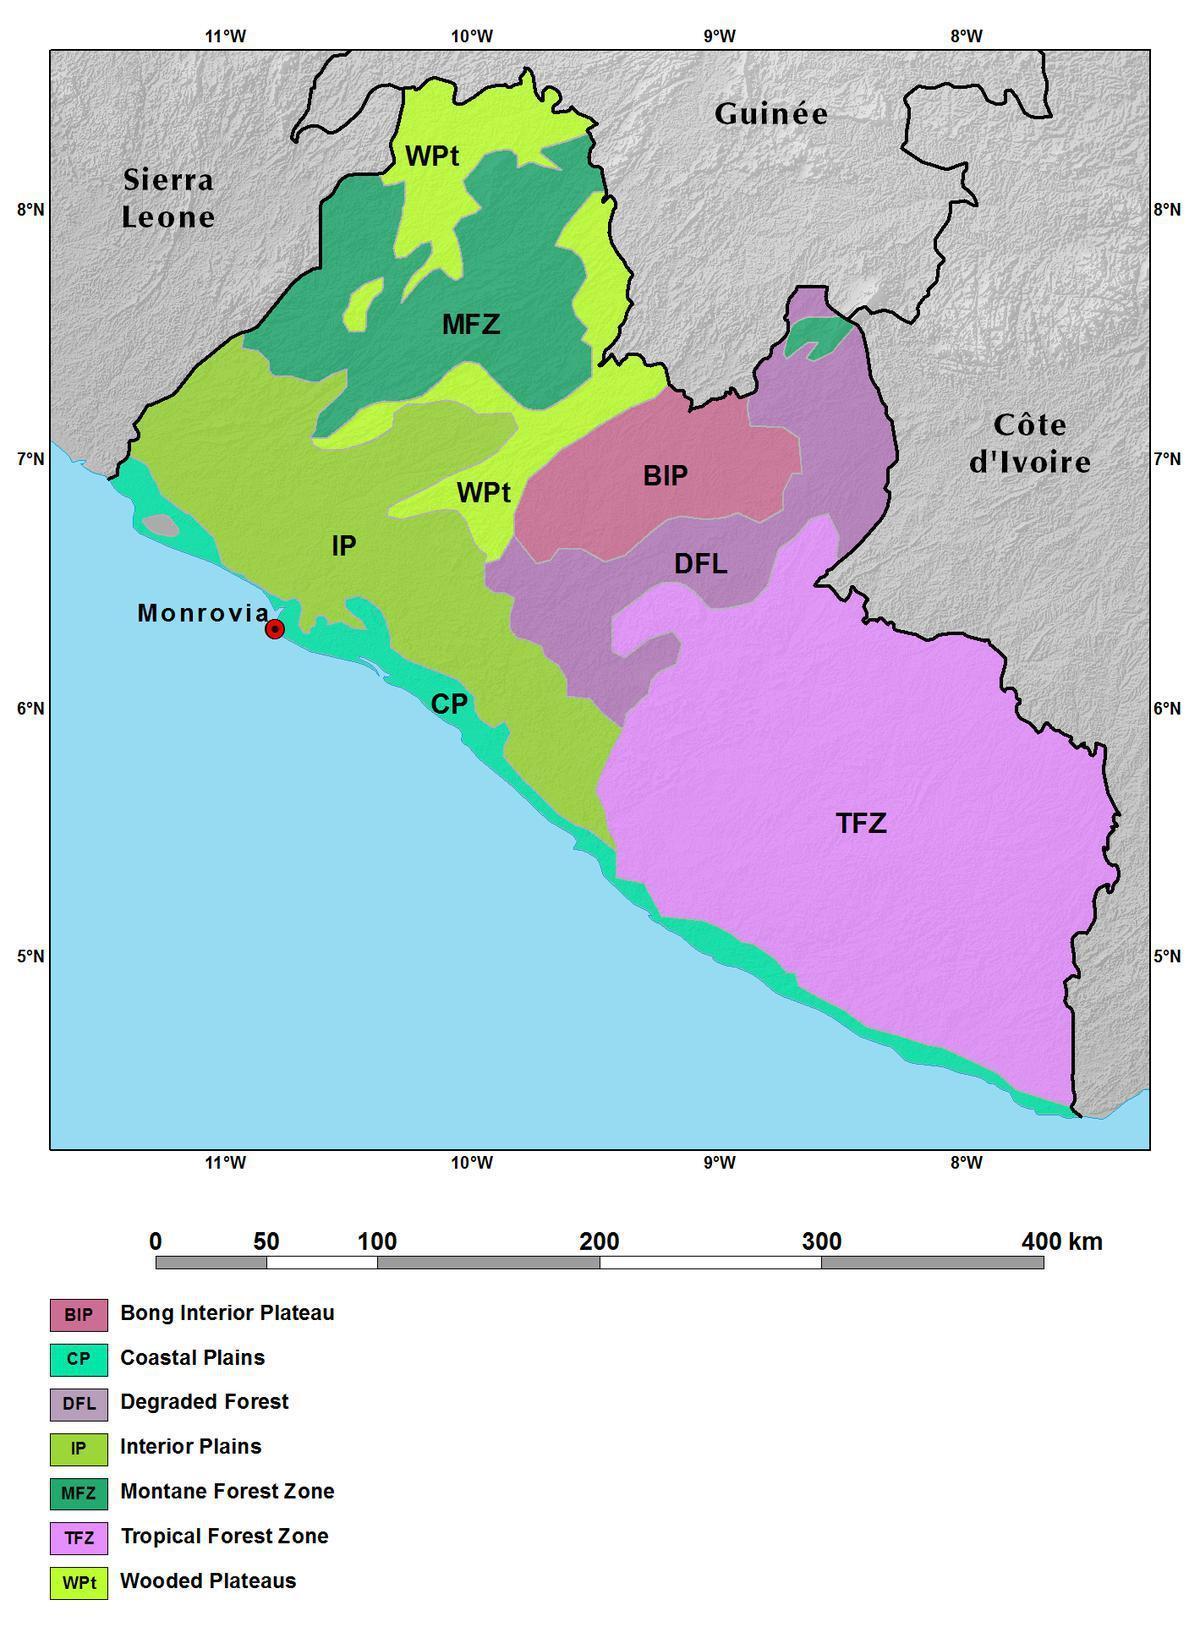 zemljevid Liberija gora